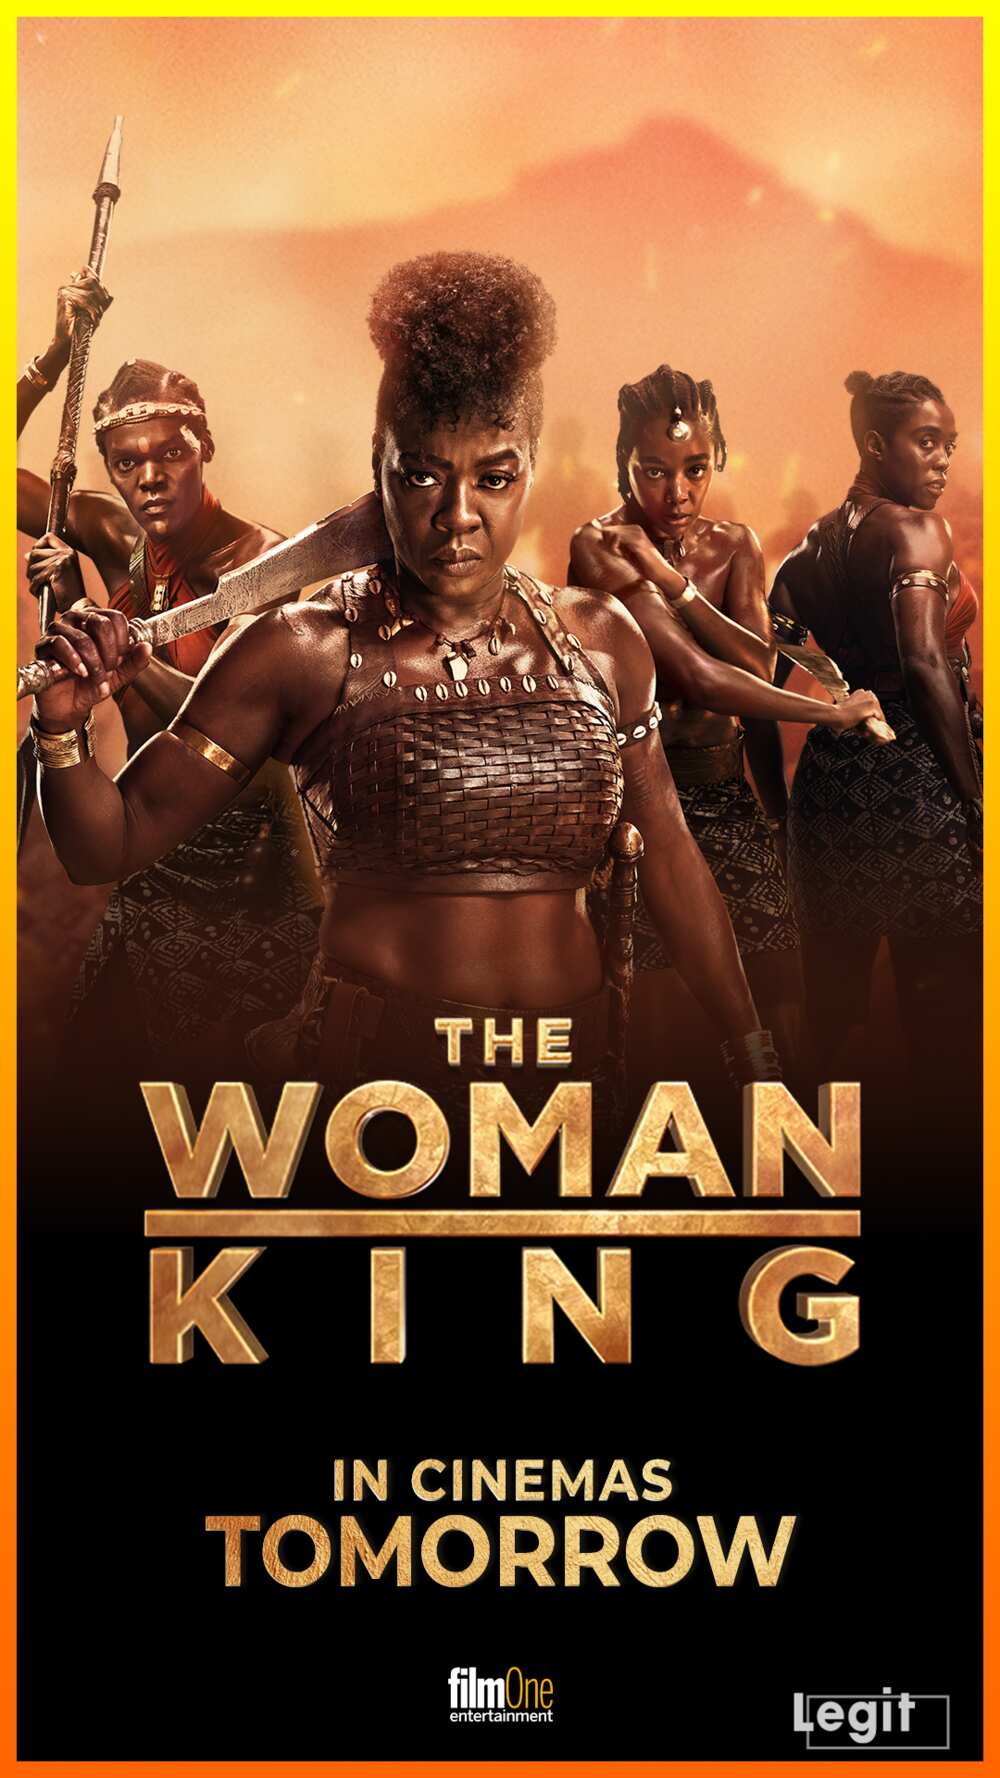 The Woman King in Cinemas, Viola Davis, Jimmy Odukoya, John Boyega